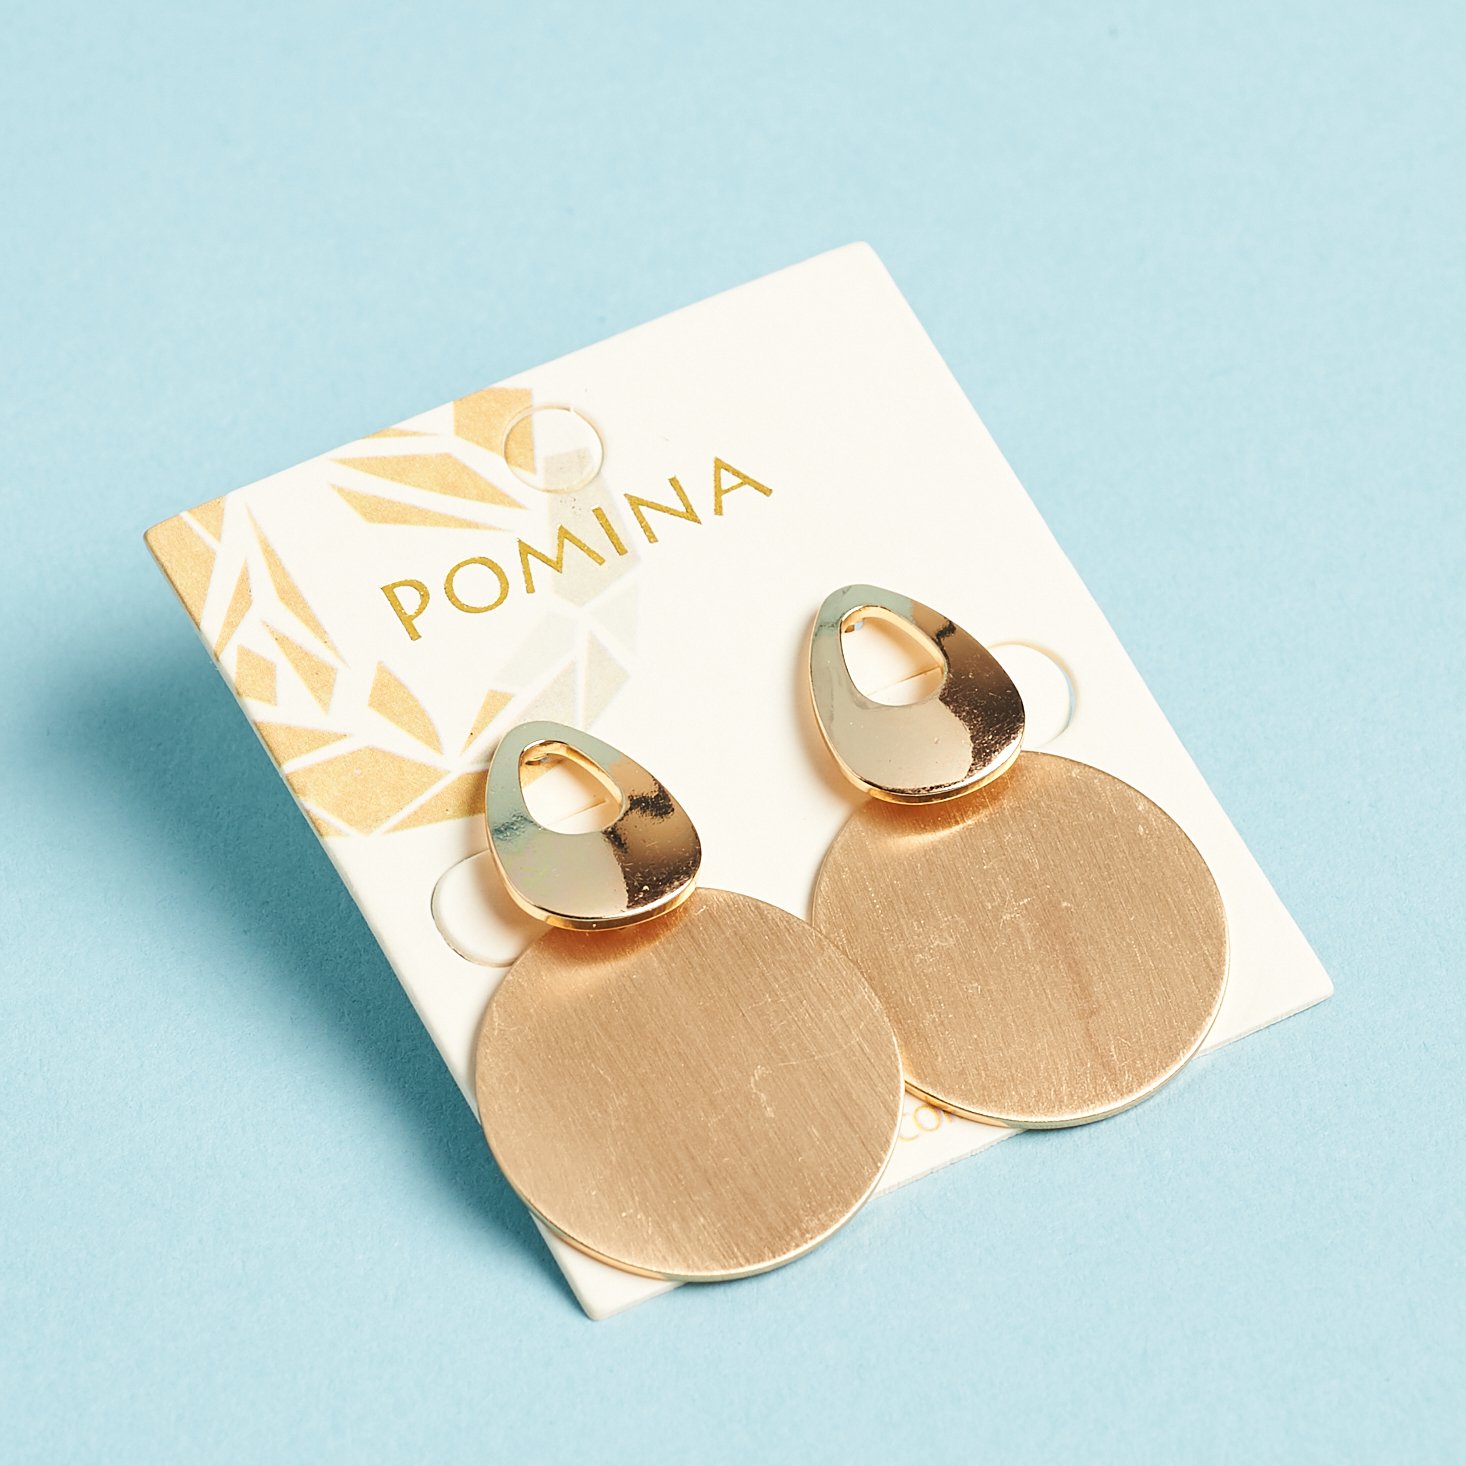 gold colored geometric earrings on card